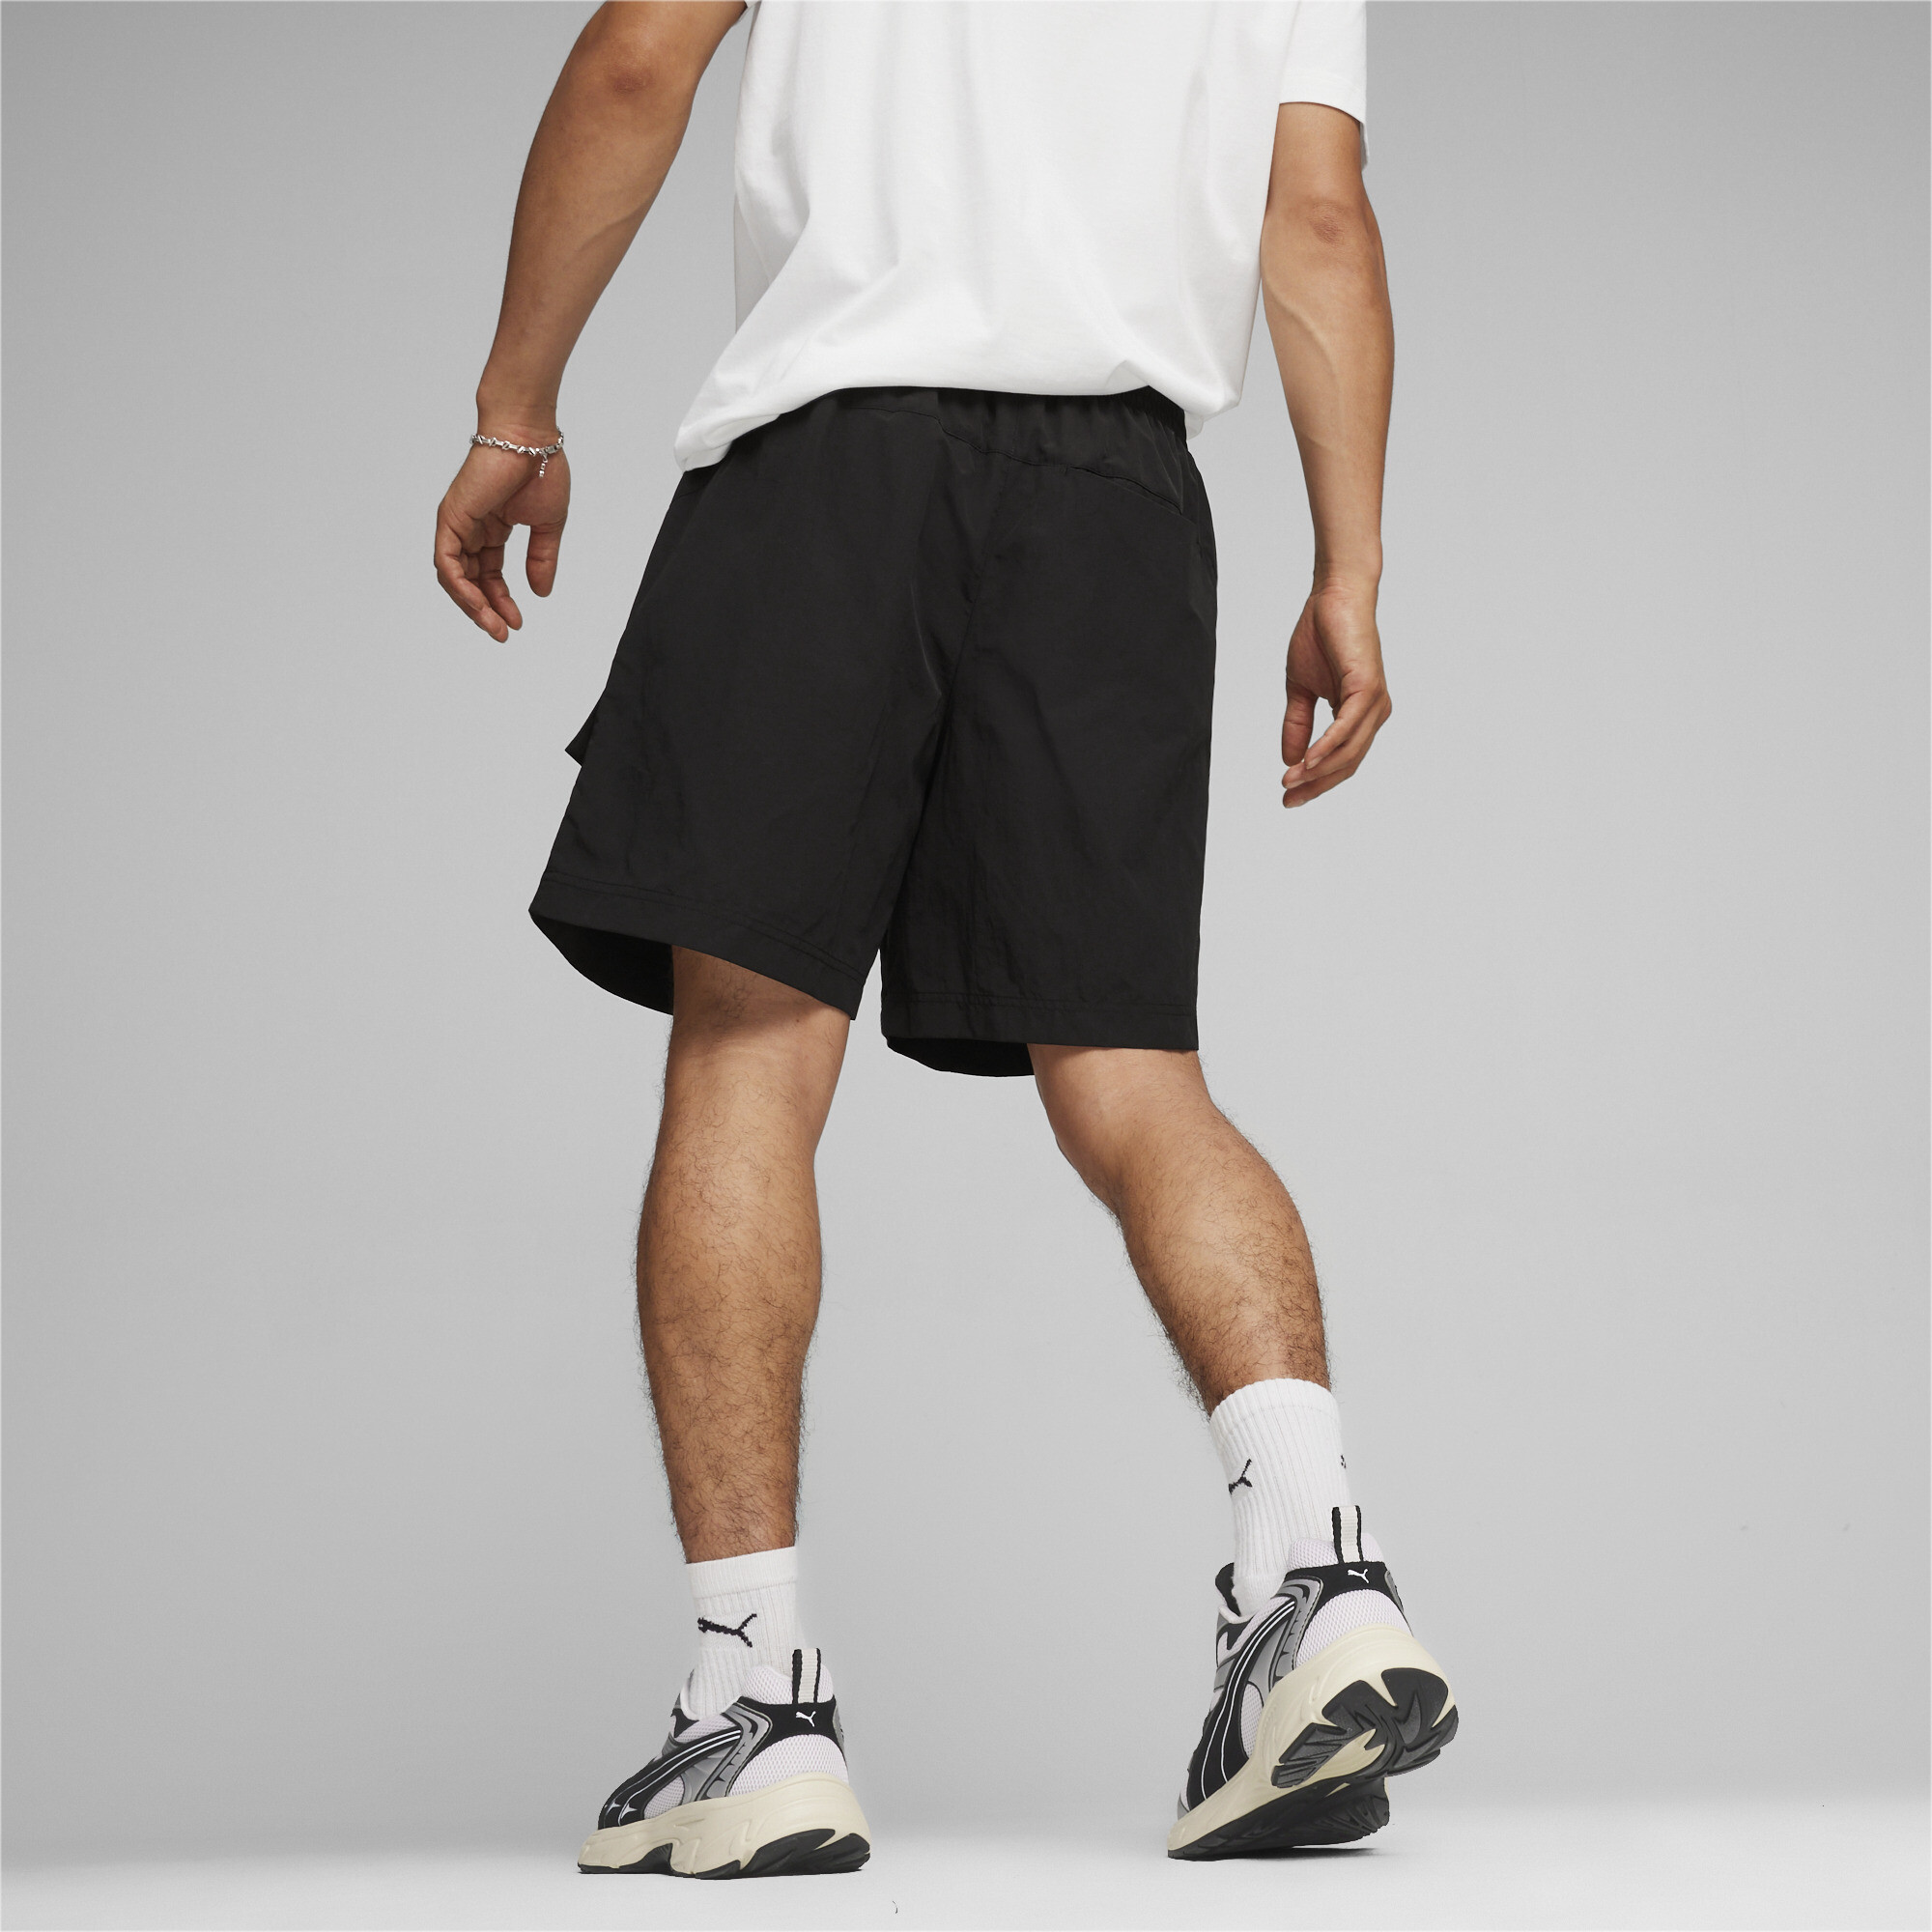 Men's Puma CLASSICS's Cargo Shorts, Black, Size M, Clothing